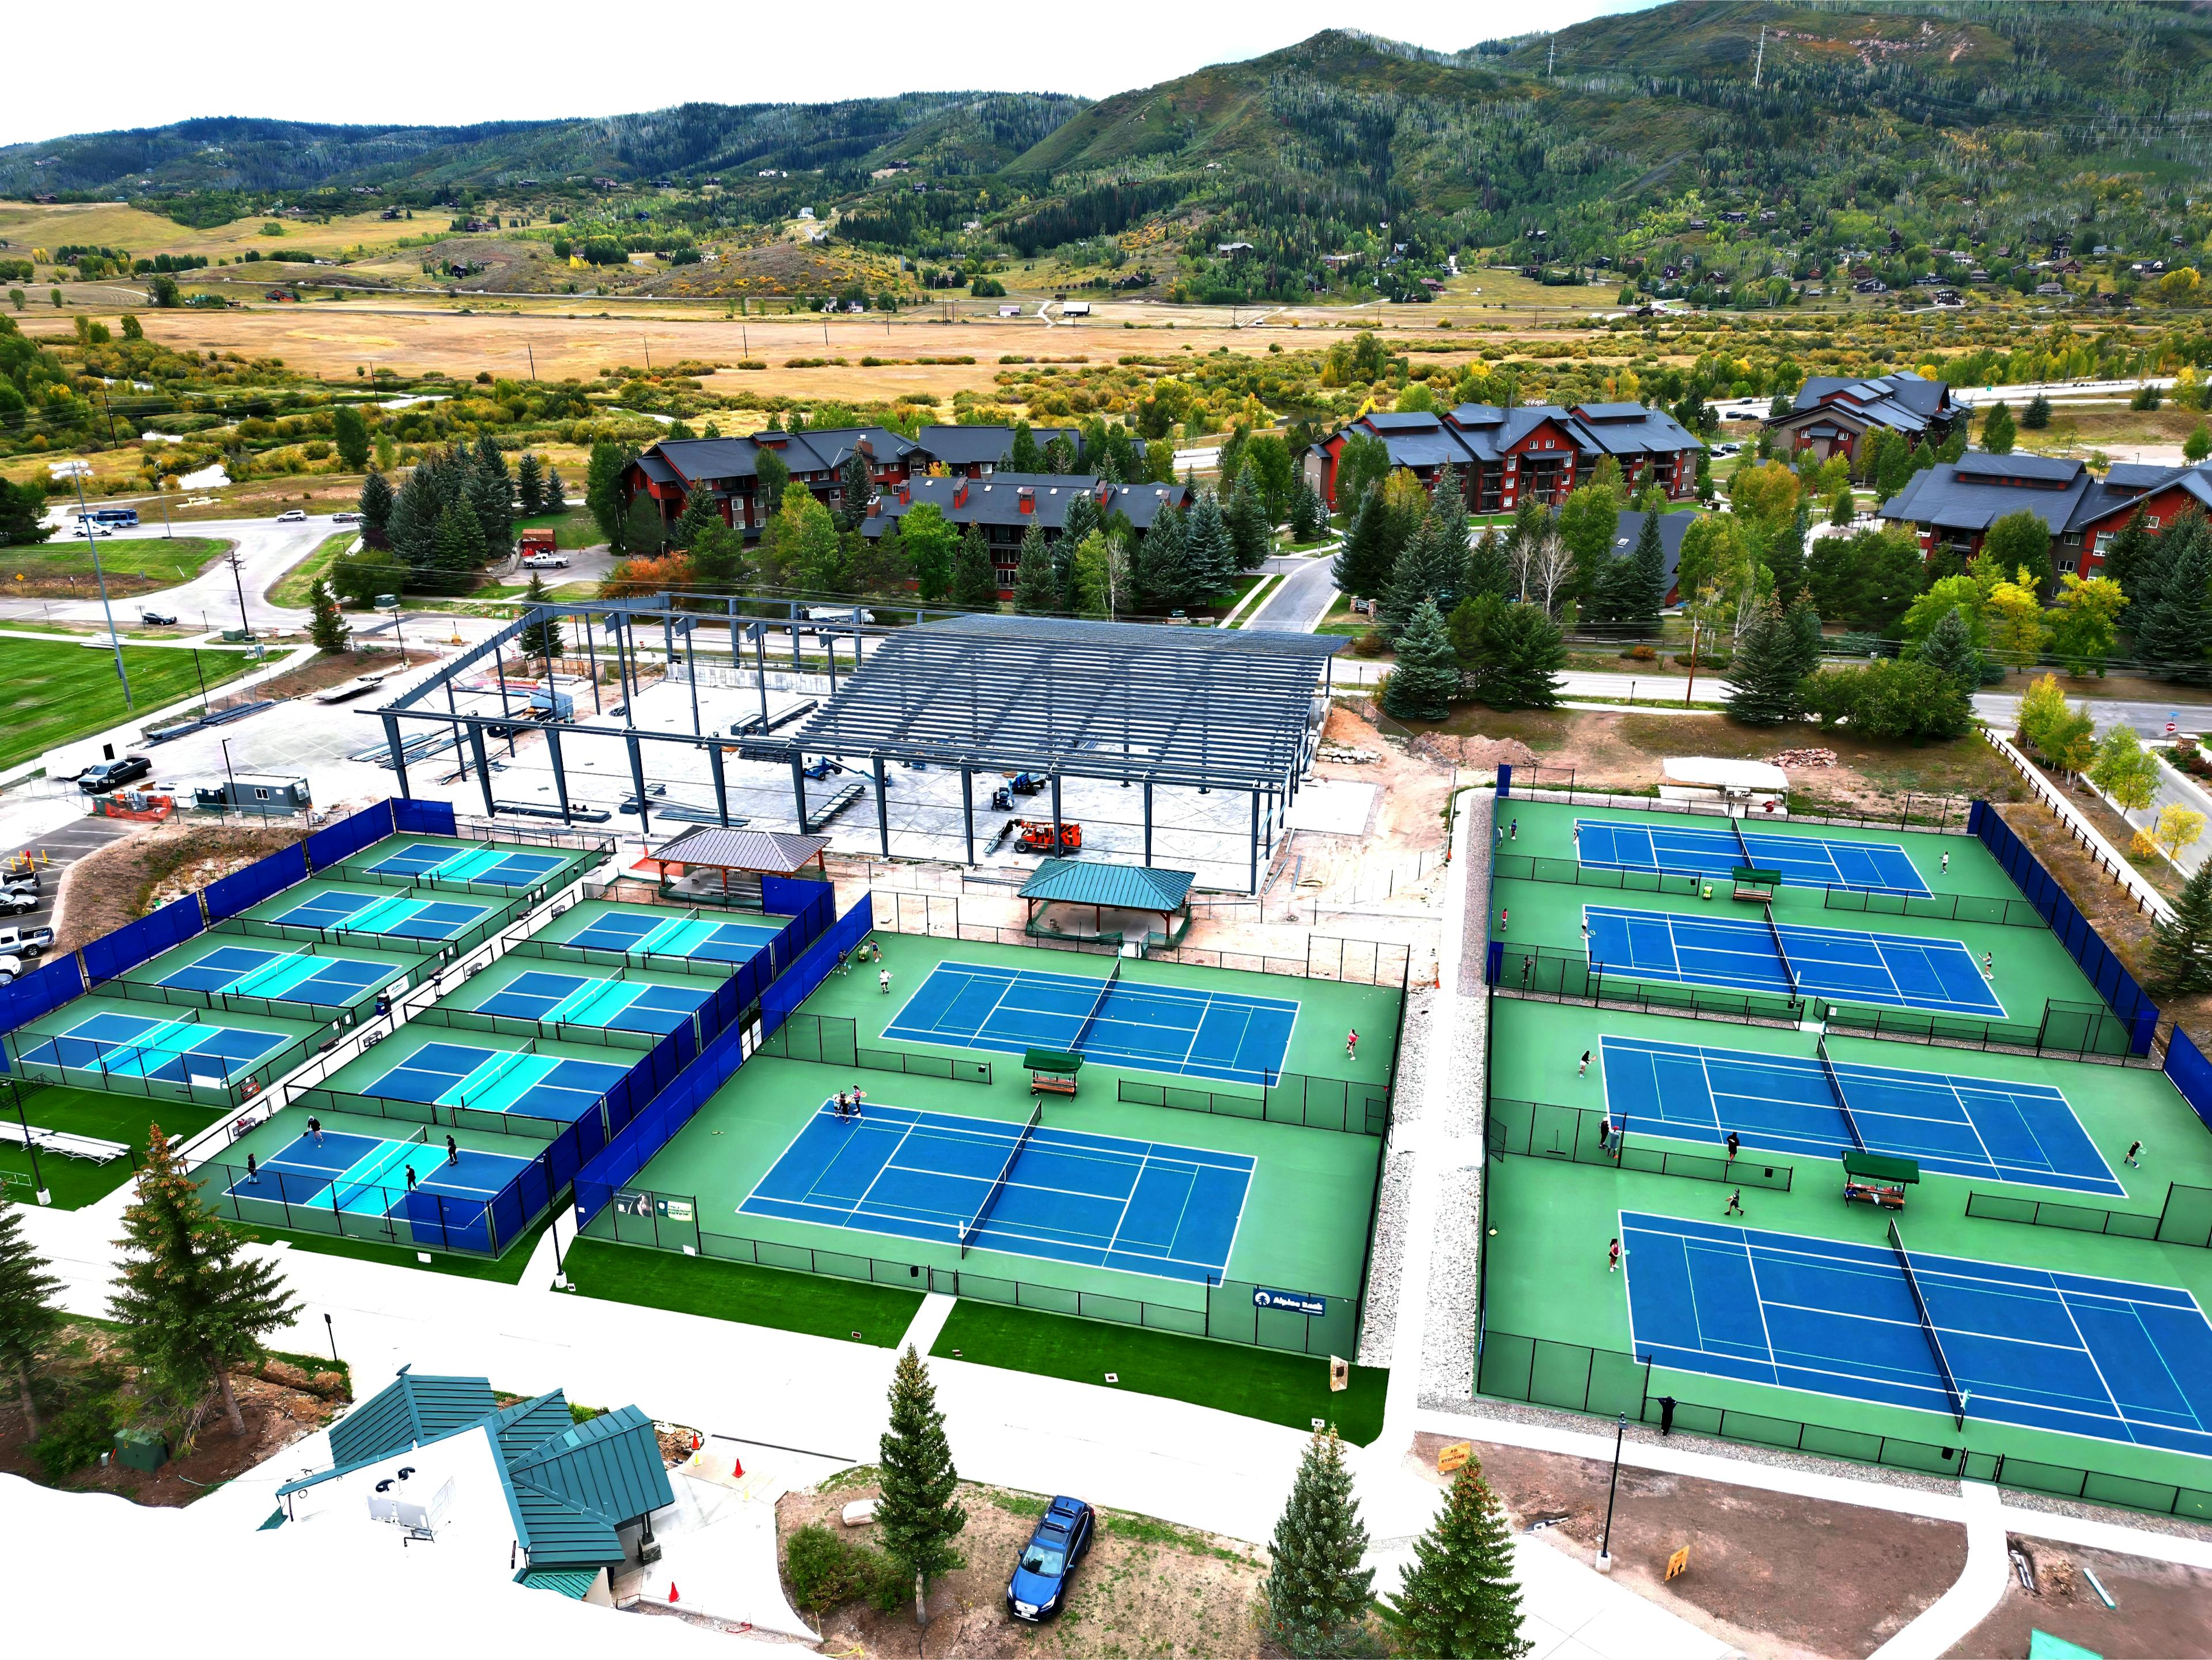 Image 1 of 8 of Steamboat Springs Tennis & Pickleball Center court